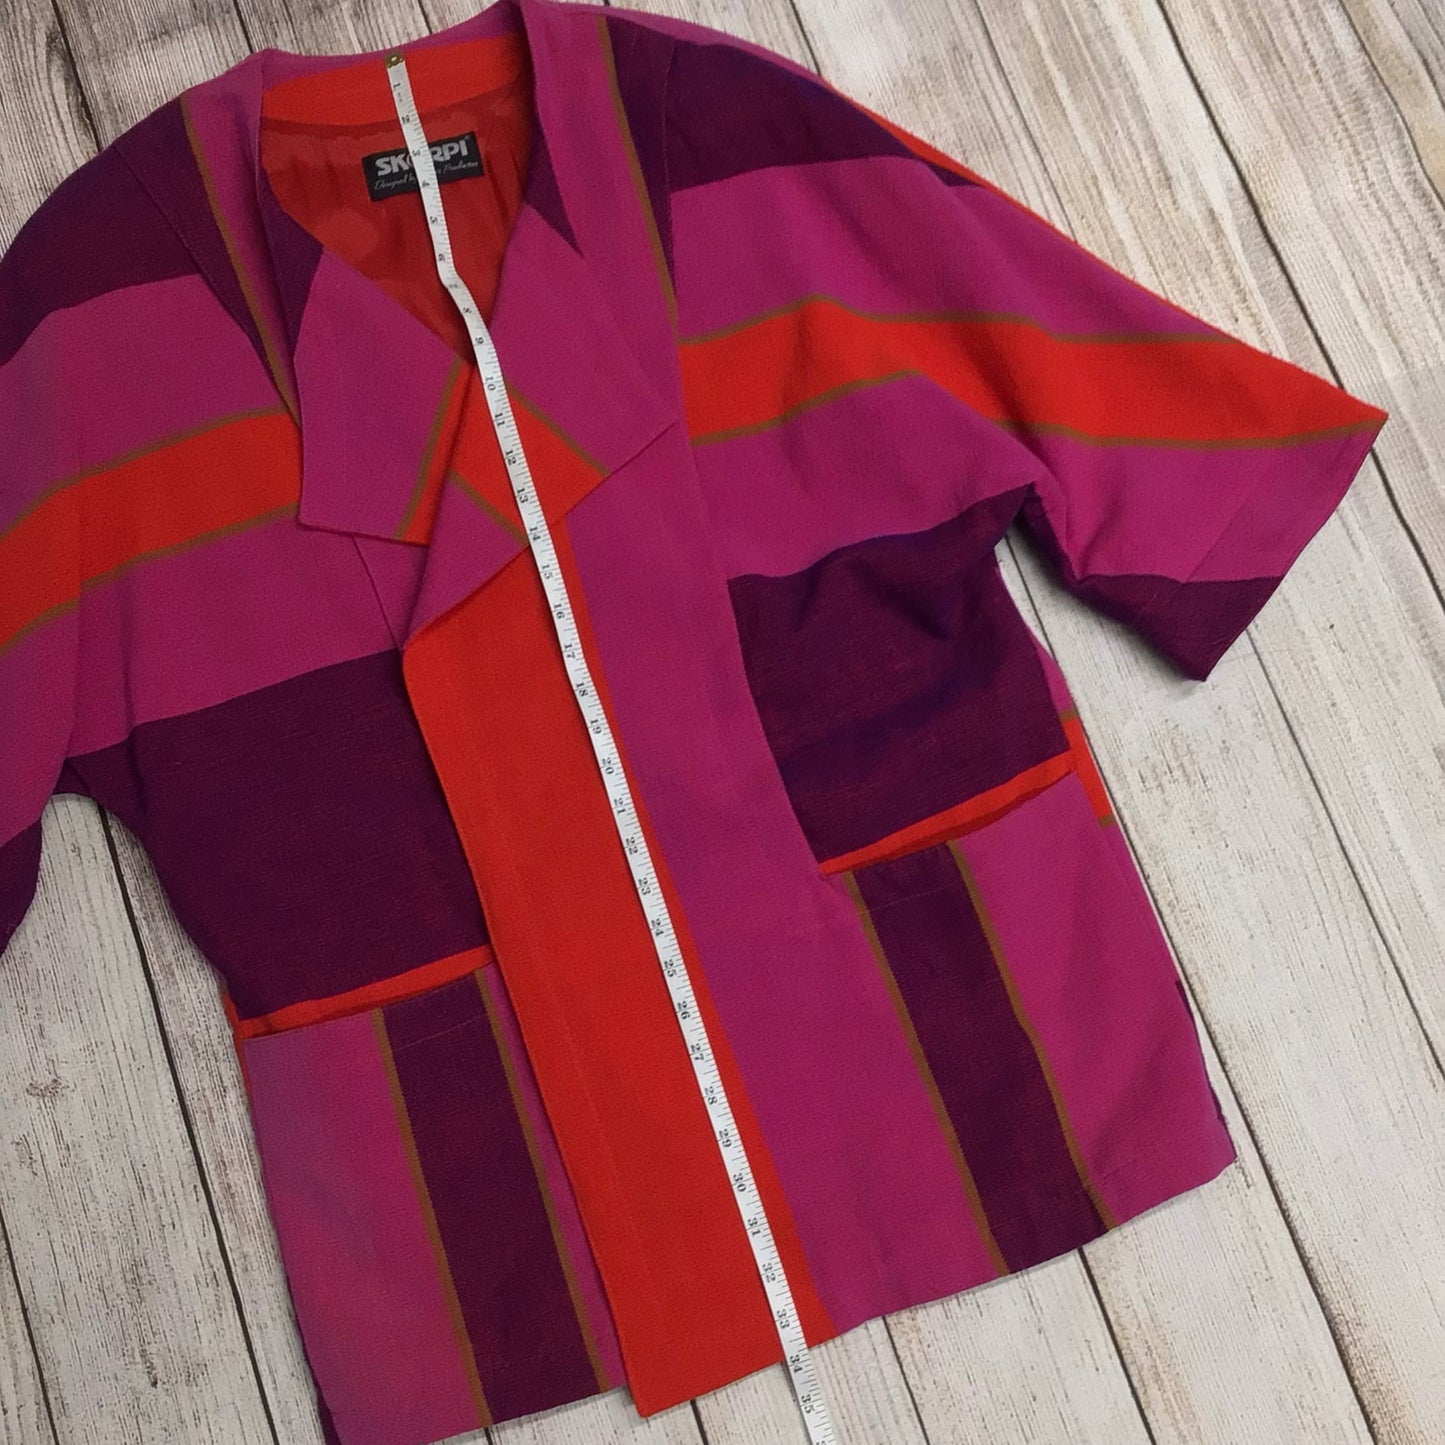 Skorpi Pink & Red Multi Open Jacket 100% Cotton Size L